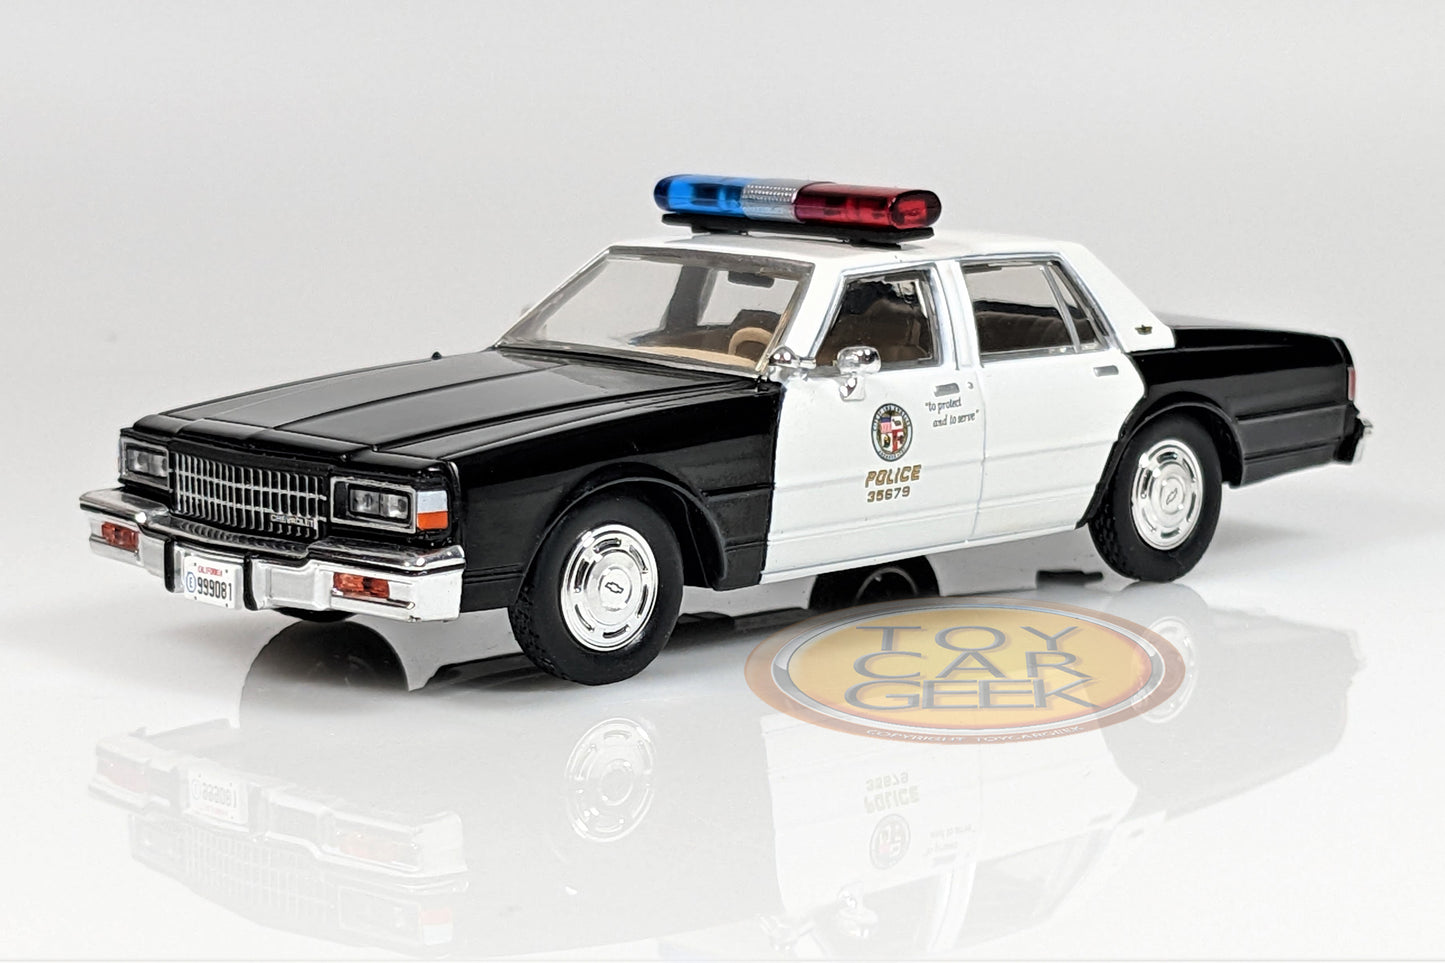 1987 Chevrolet Caprice, LAPD